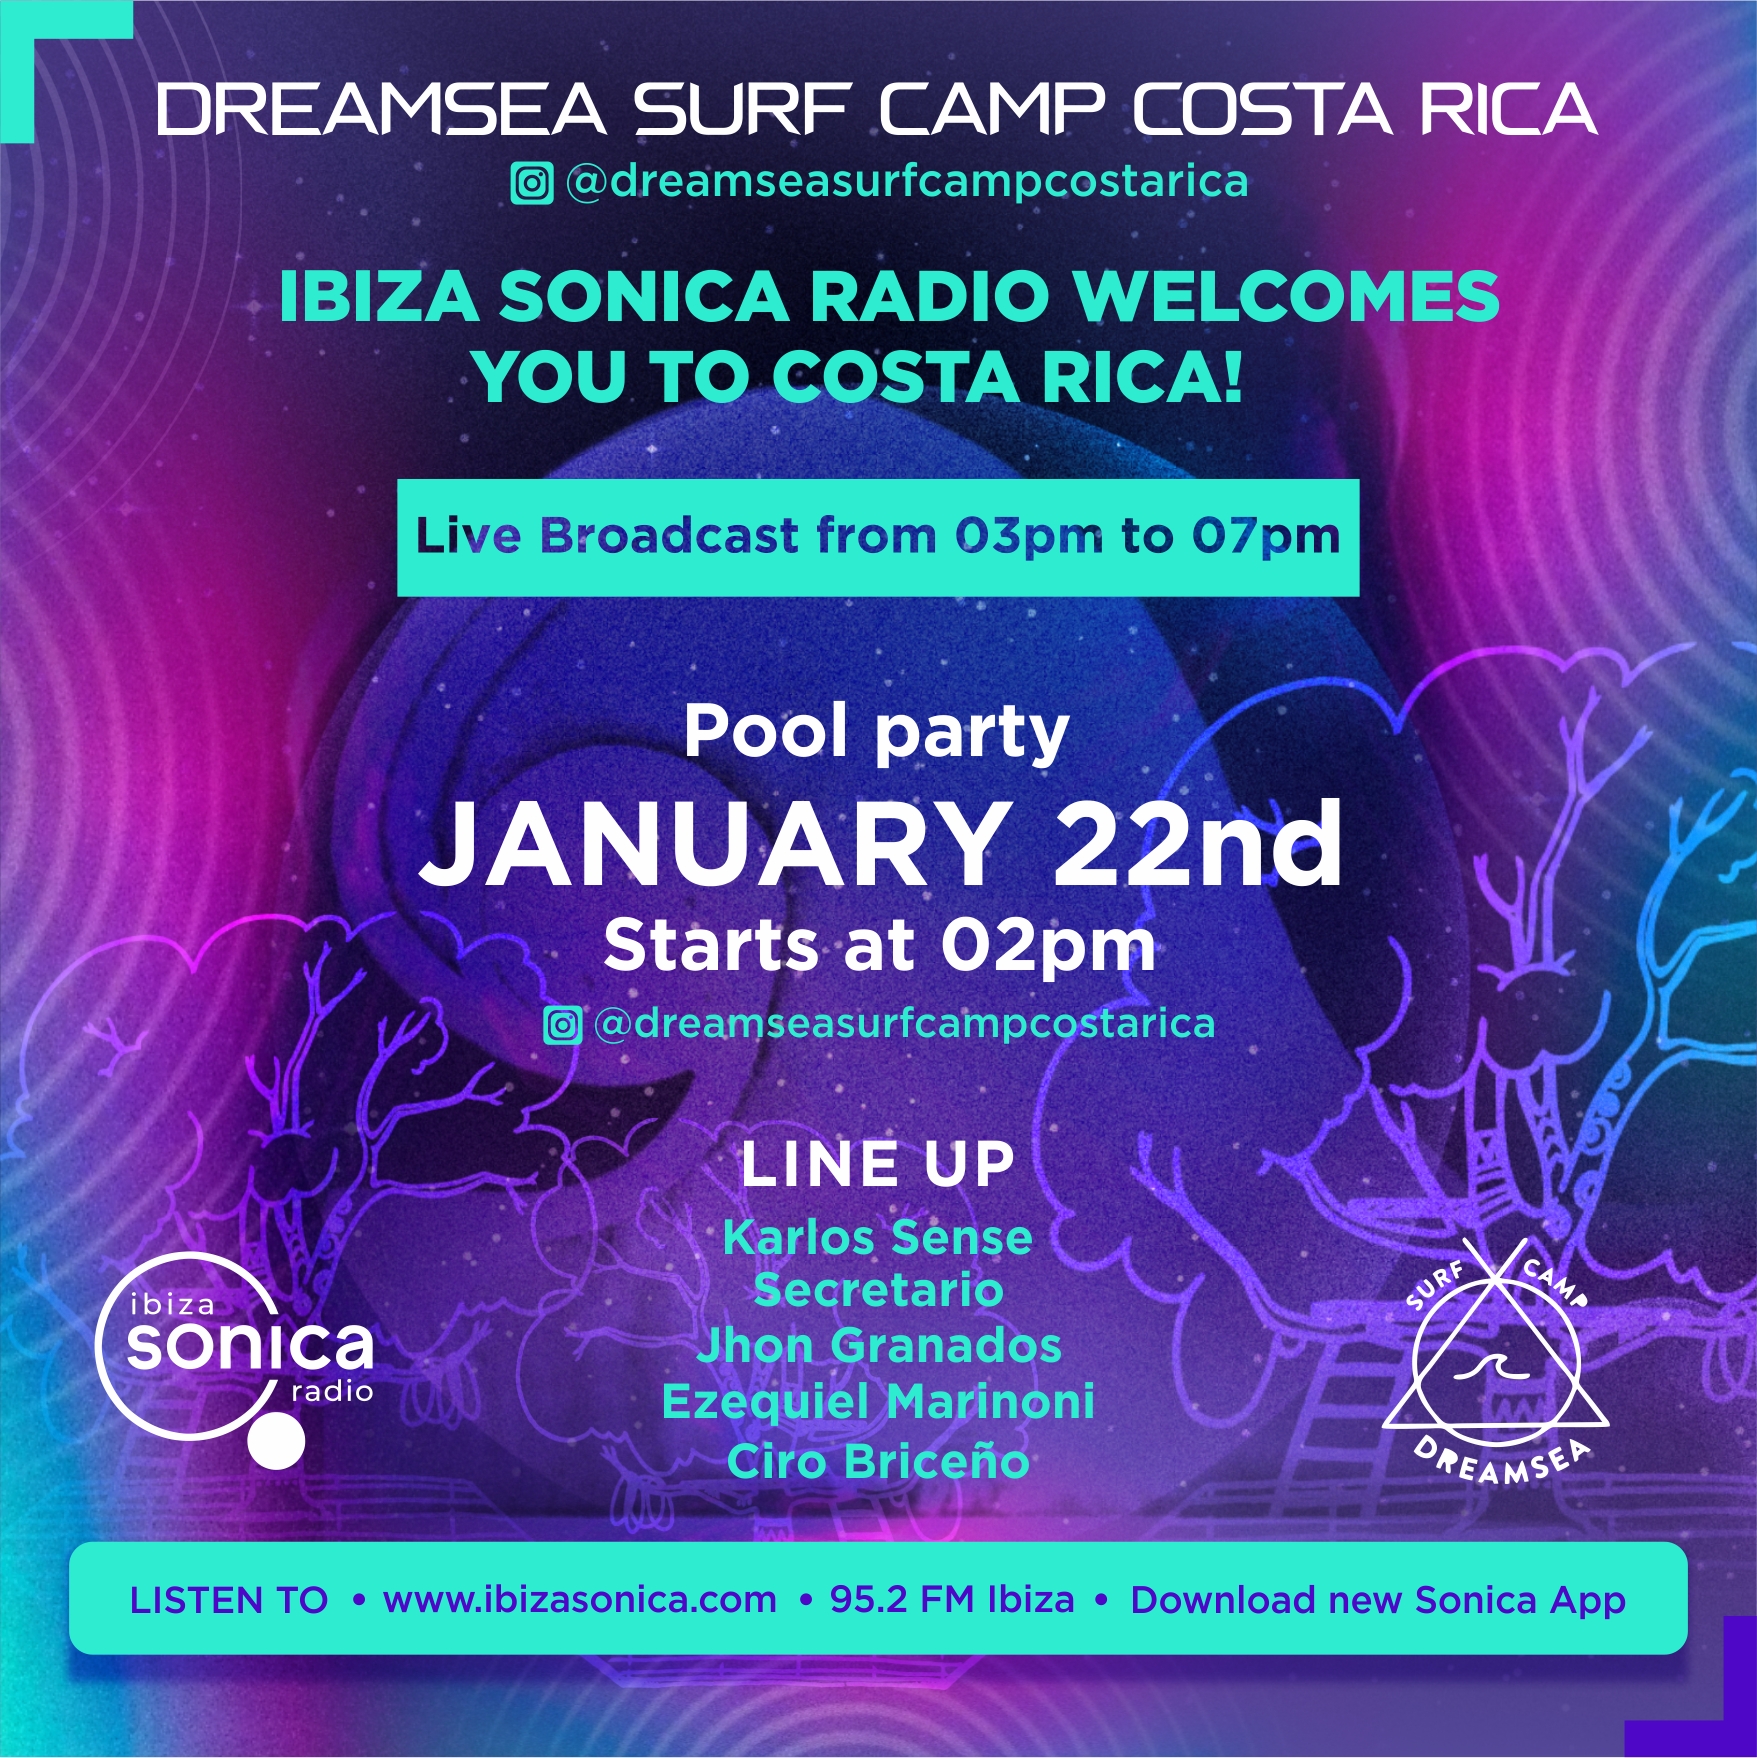 Dreamsea Surf Camp Costa Rica | Events | Ibiza Sonica Radio Music Fest Tickets | Featured Image